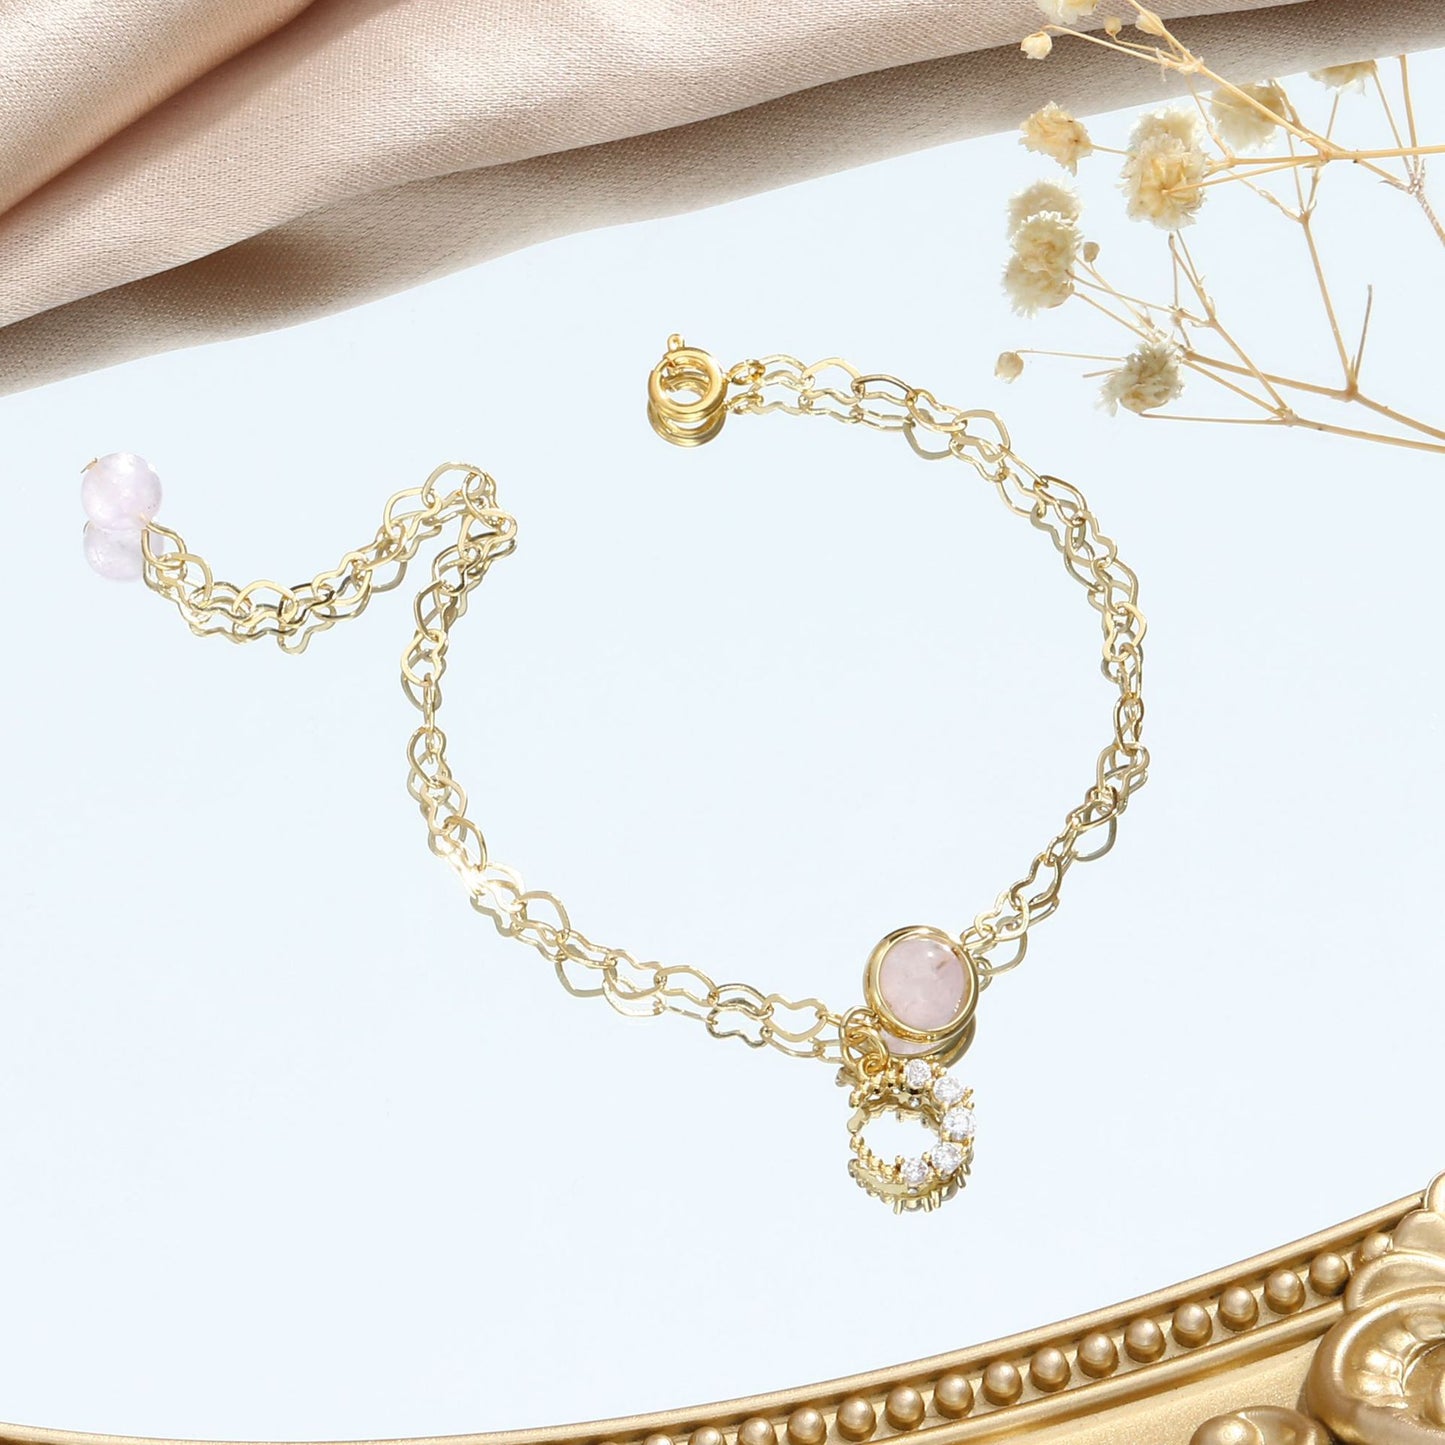 Fortune's Favor Amethyst Crystal Bracelet for Women - Sterling Silver Hand Jewelry